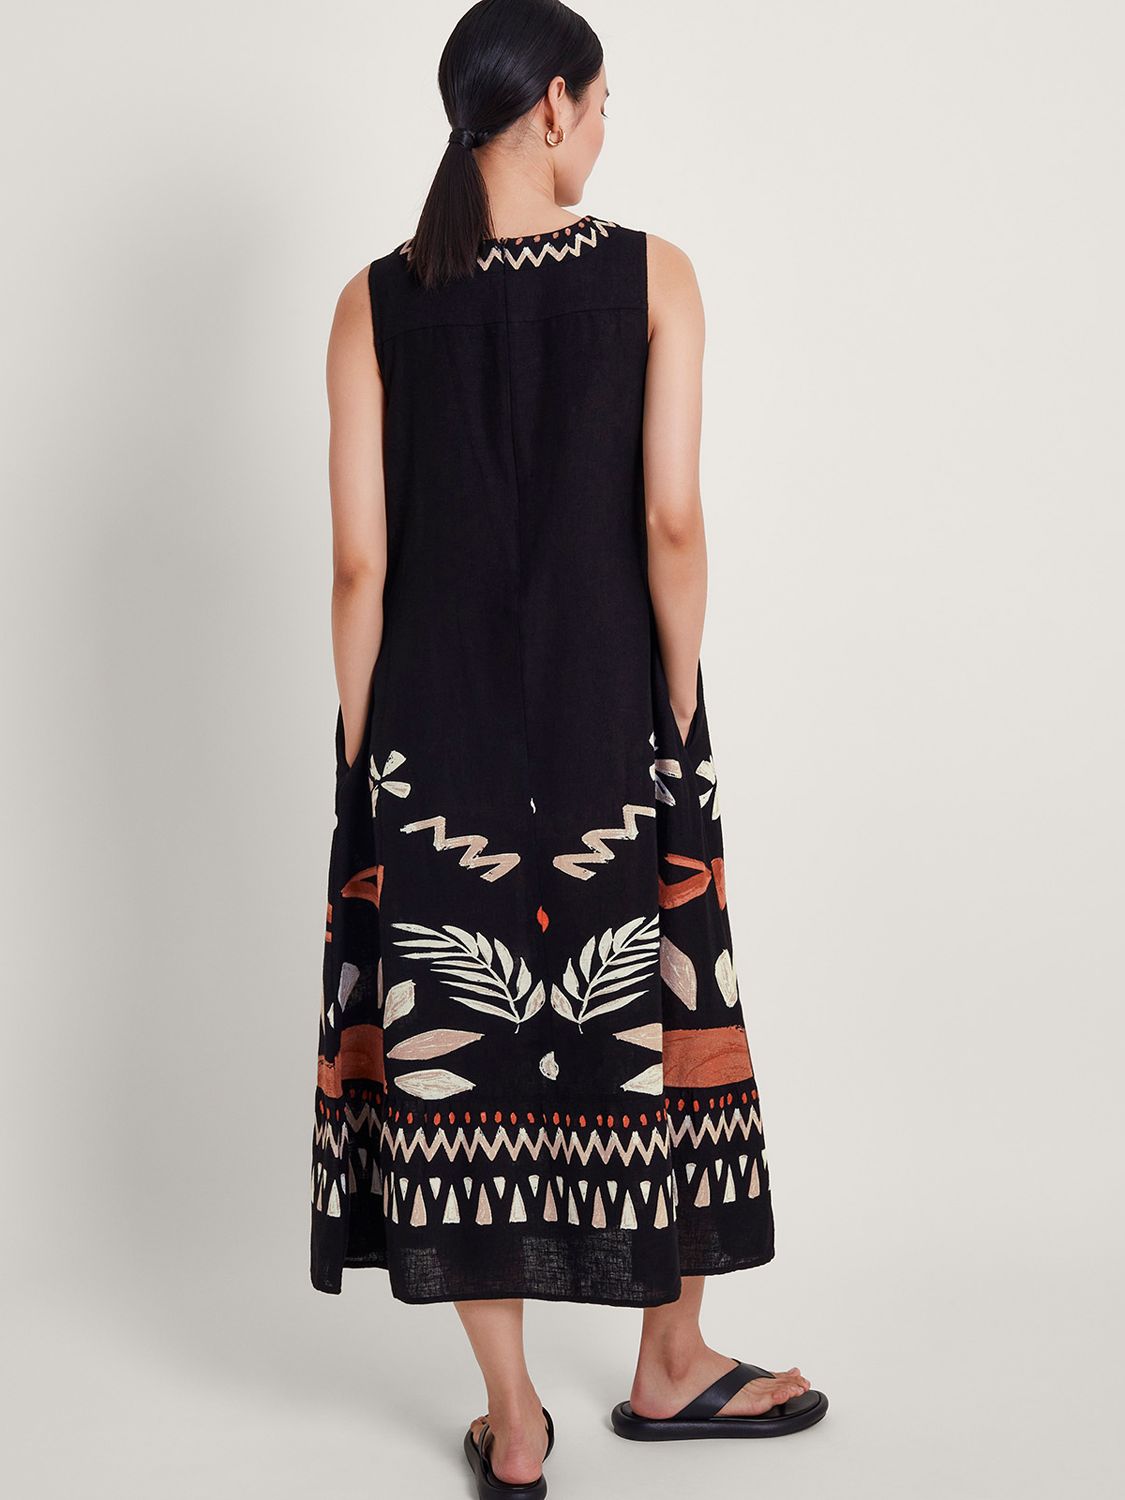 Monsoon Carlotta Embroidered Linen Blend Midi Dress, Black/Multi, XL